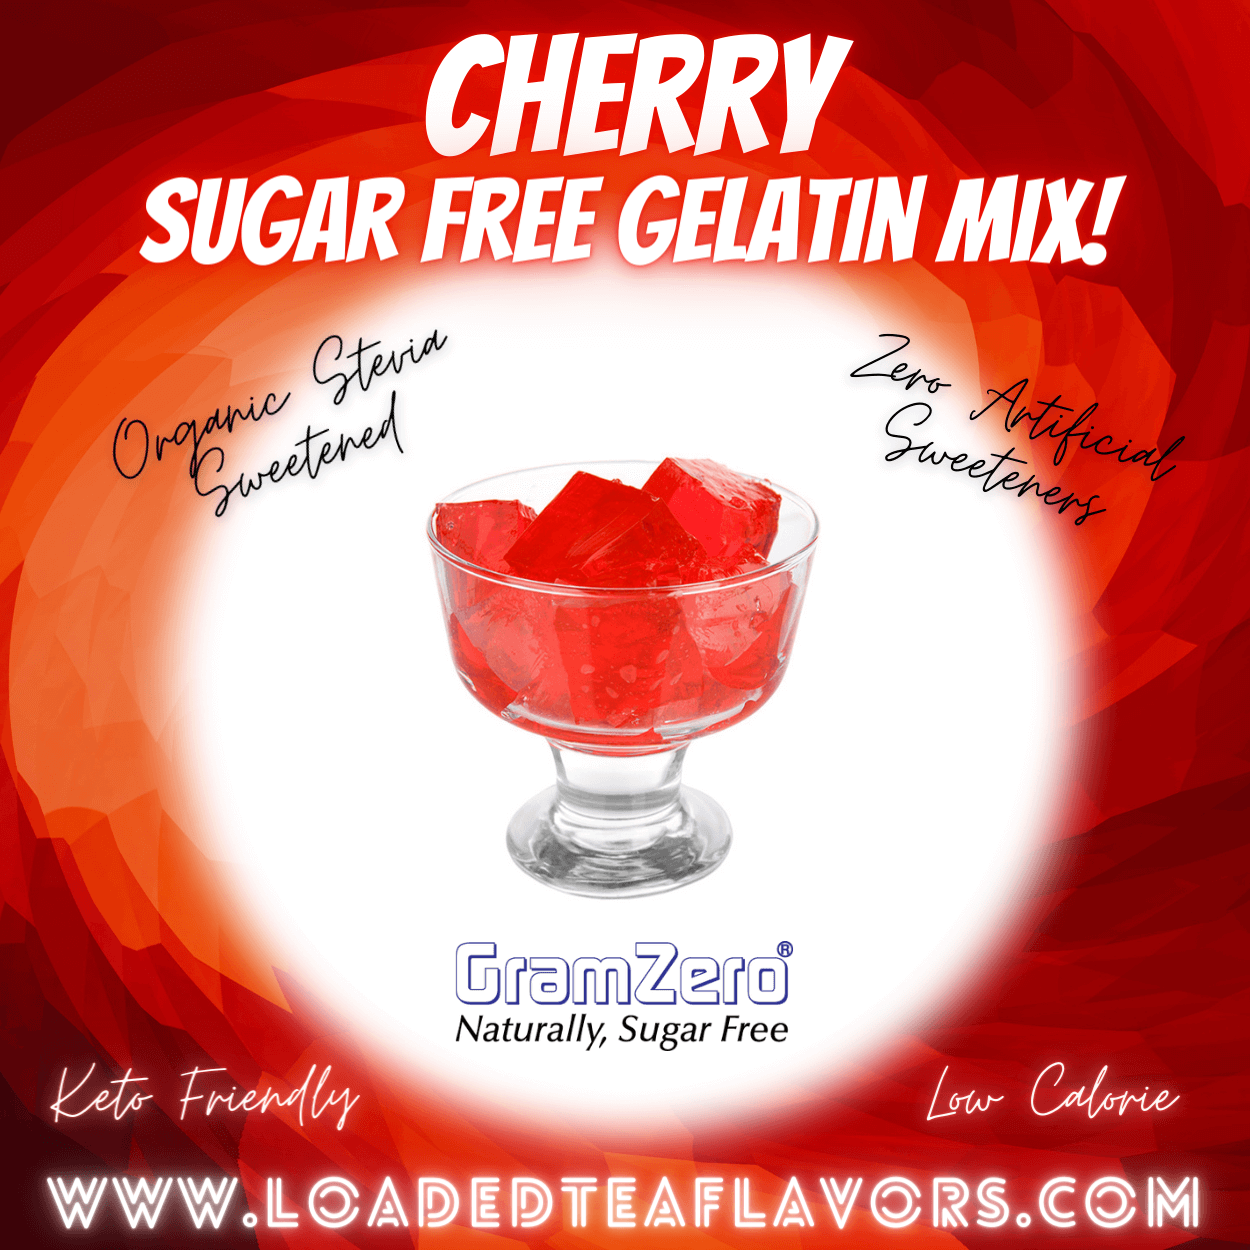 Gramzero Cherry Sugar Free Gelatin Mix Stevia Sweetened Low Calorie Keto Friendly